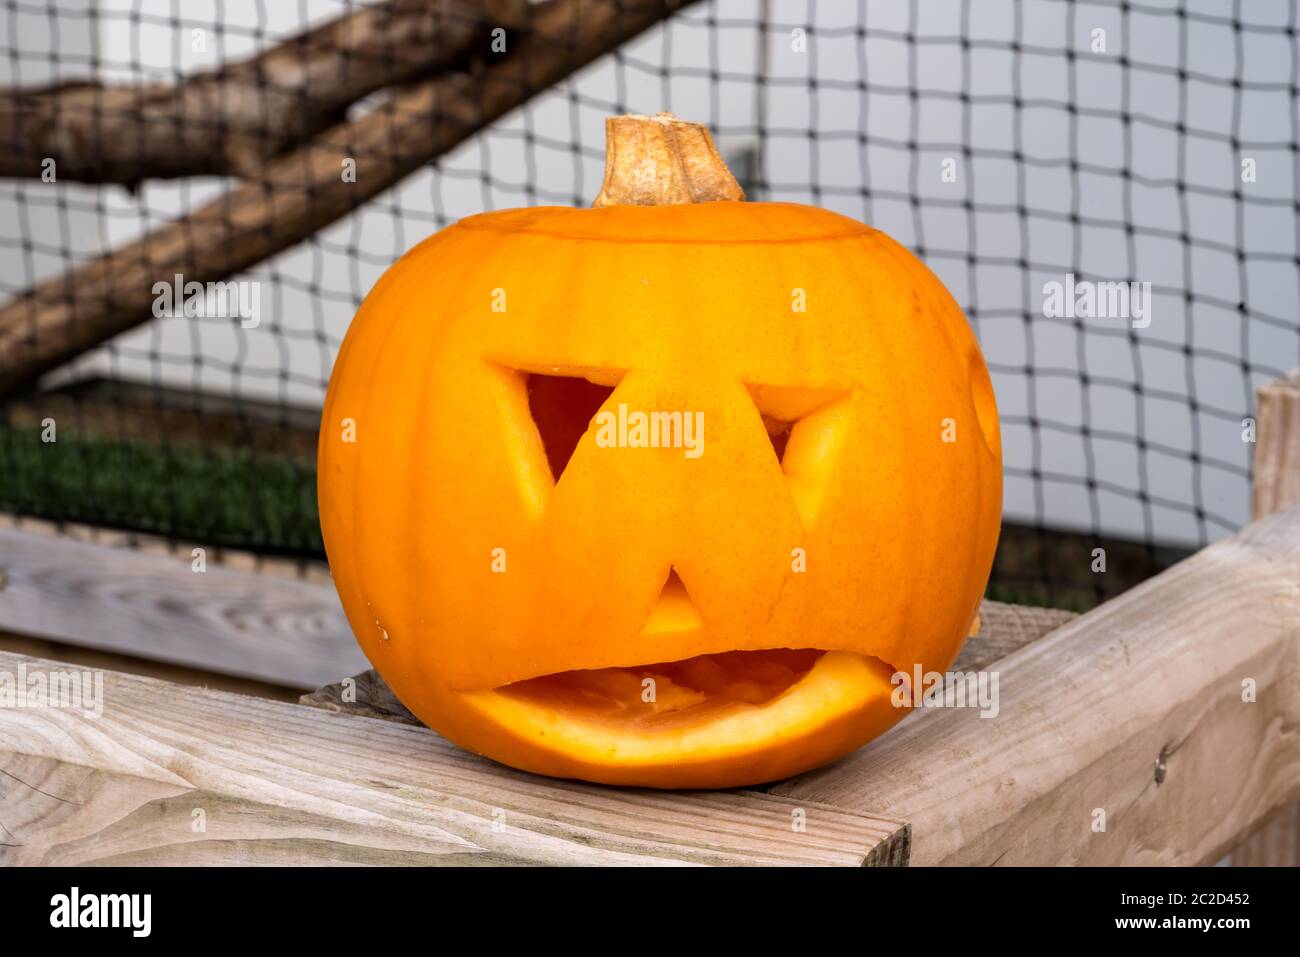 Halloween Jack o' lantern pumpkin Stock Photo - Alamy